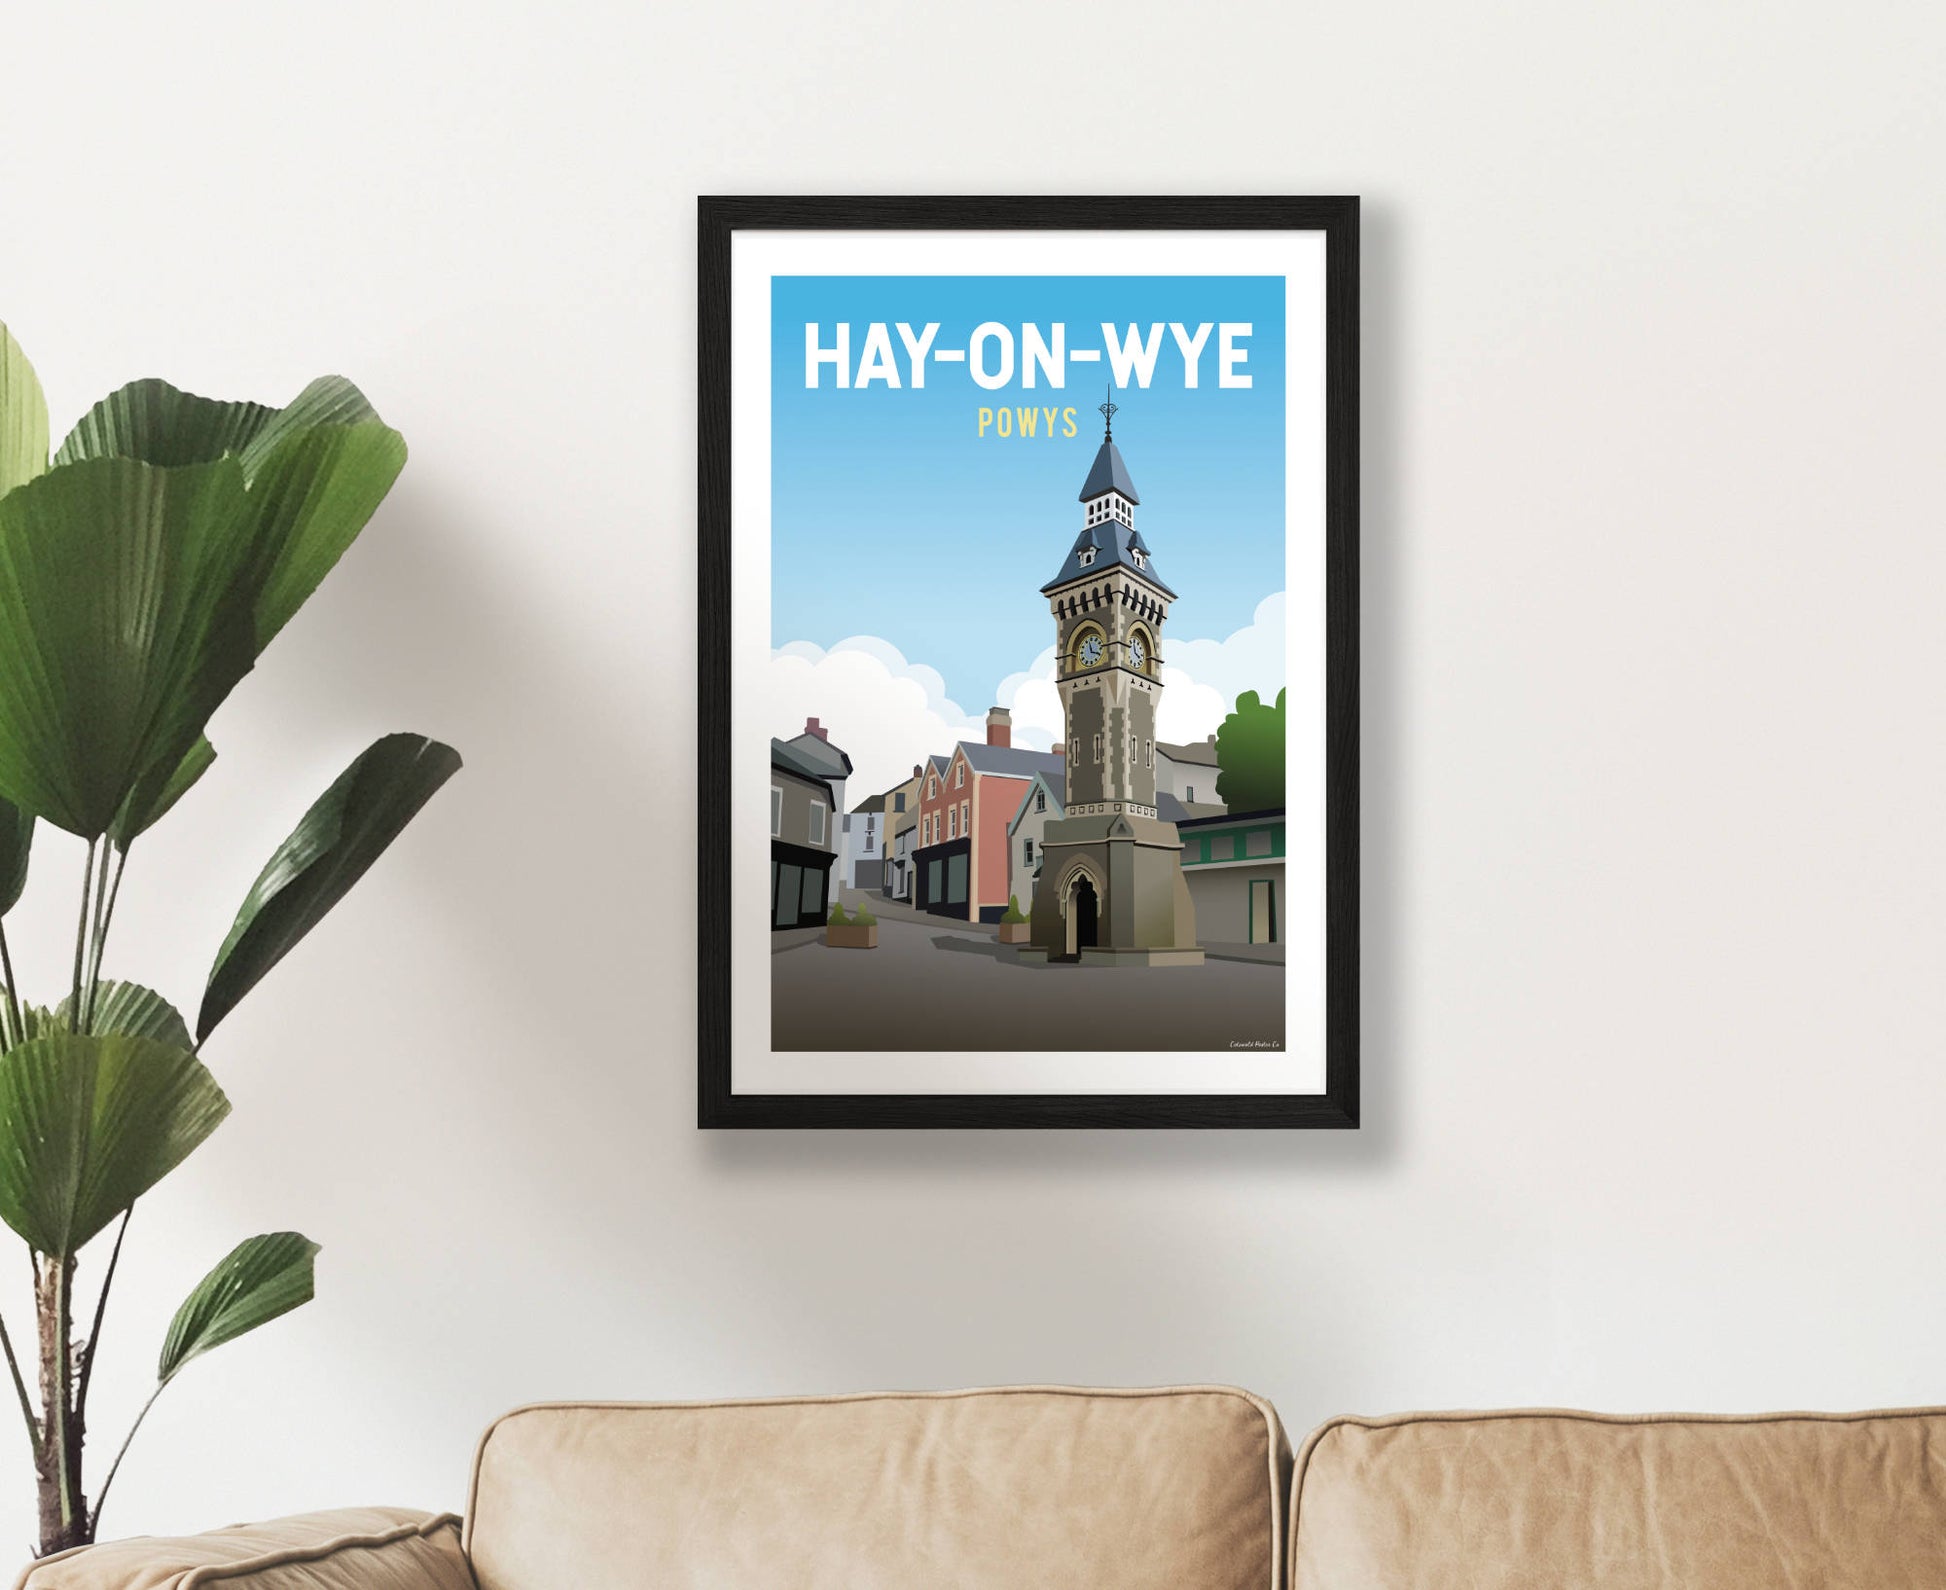 Hay-on-Wye Poster in black frame